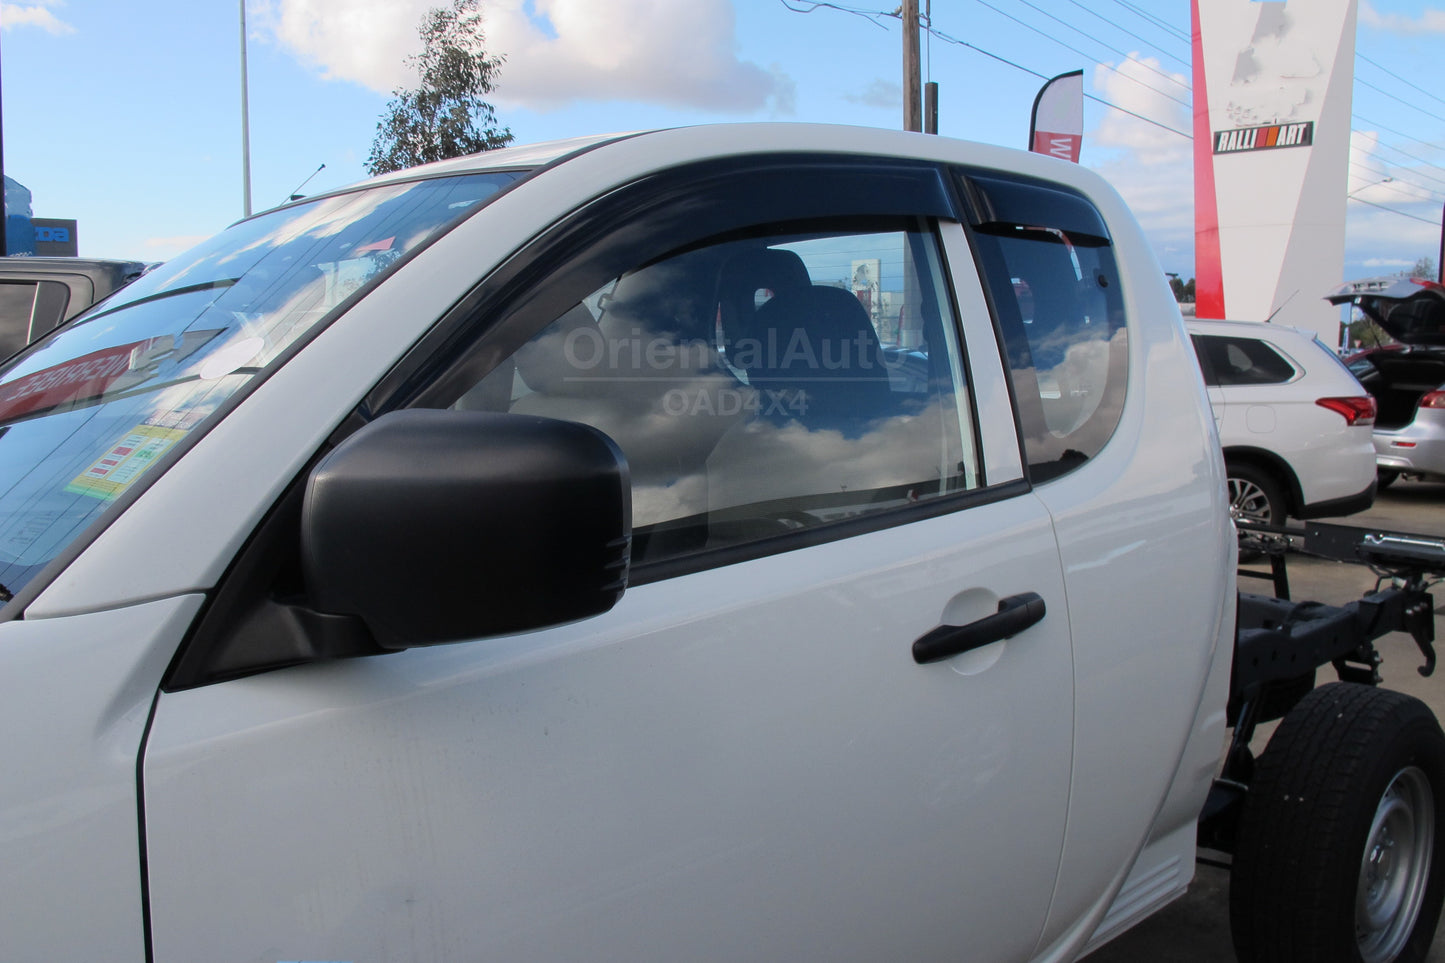 Injection Bonnet Protector & Premium 4pcs Weathershield for Mitsubishi Triton Extra Cab 2006-2015 Weather Shields Window Visor + Hood Protector Bonnet Guard